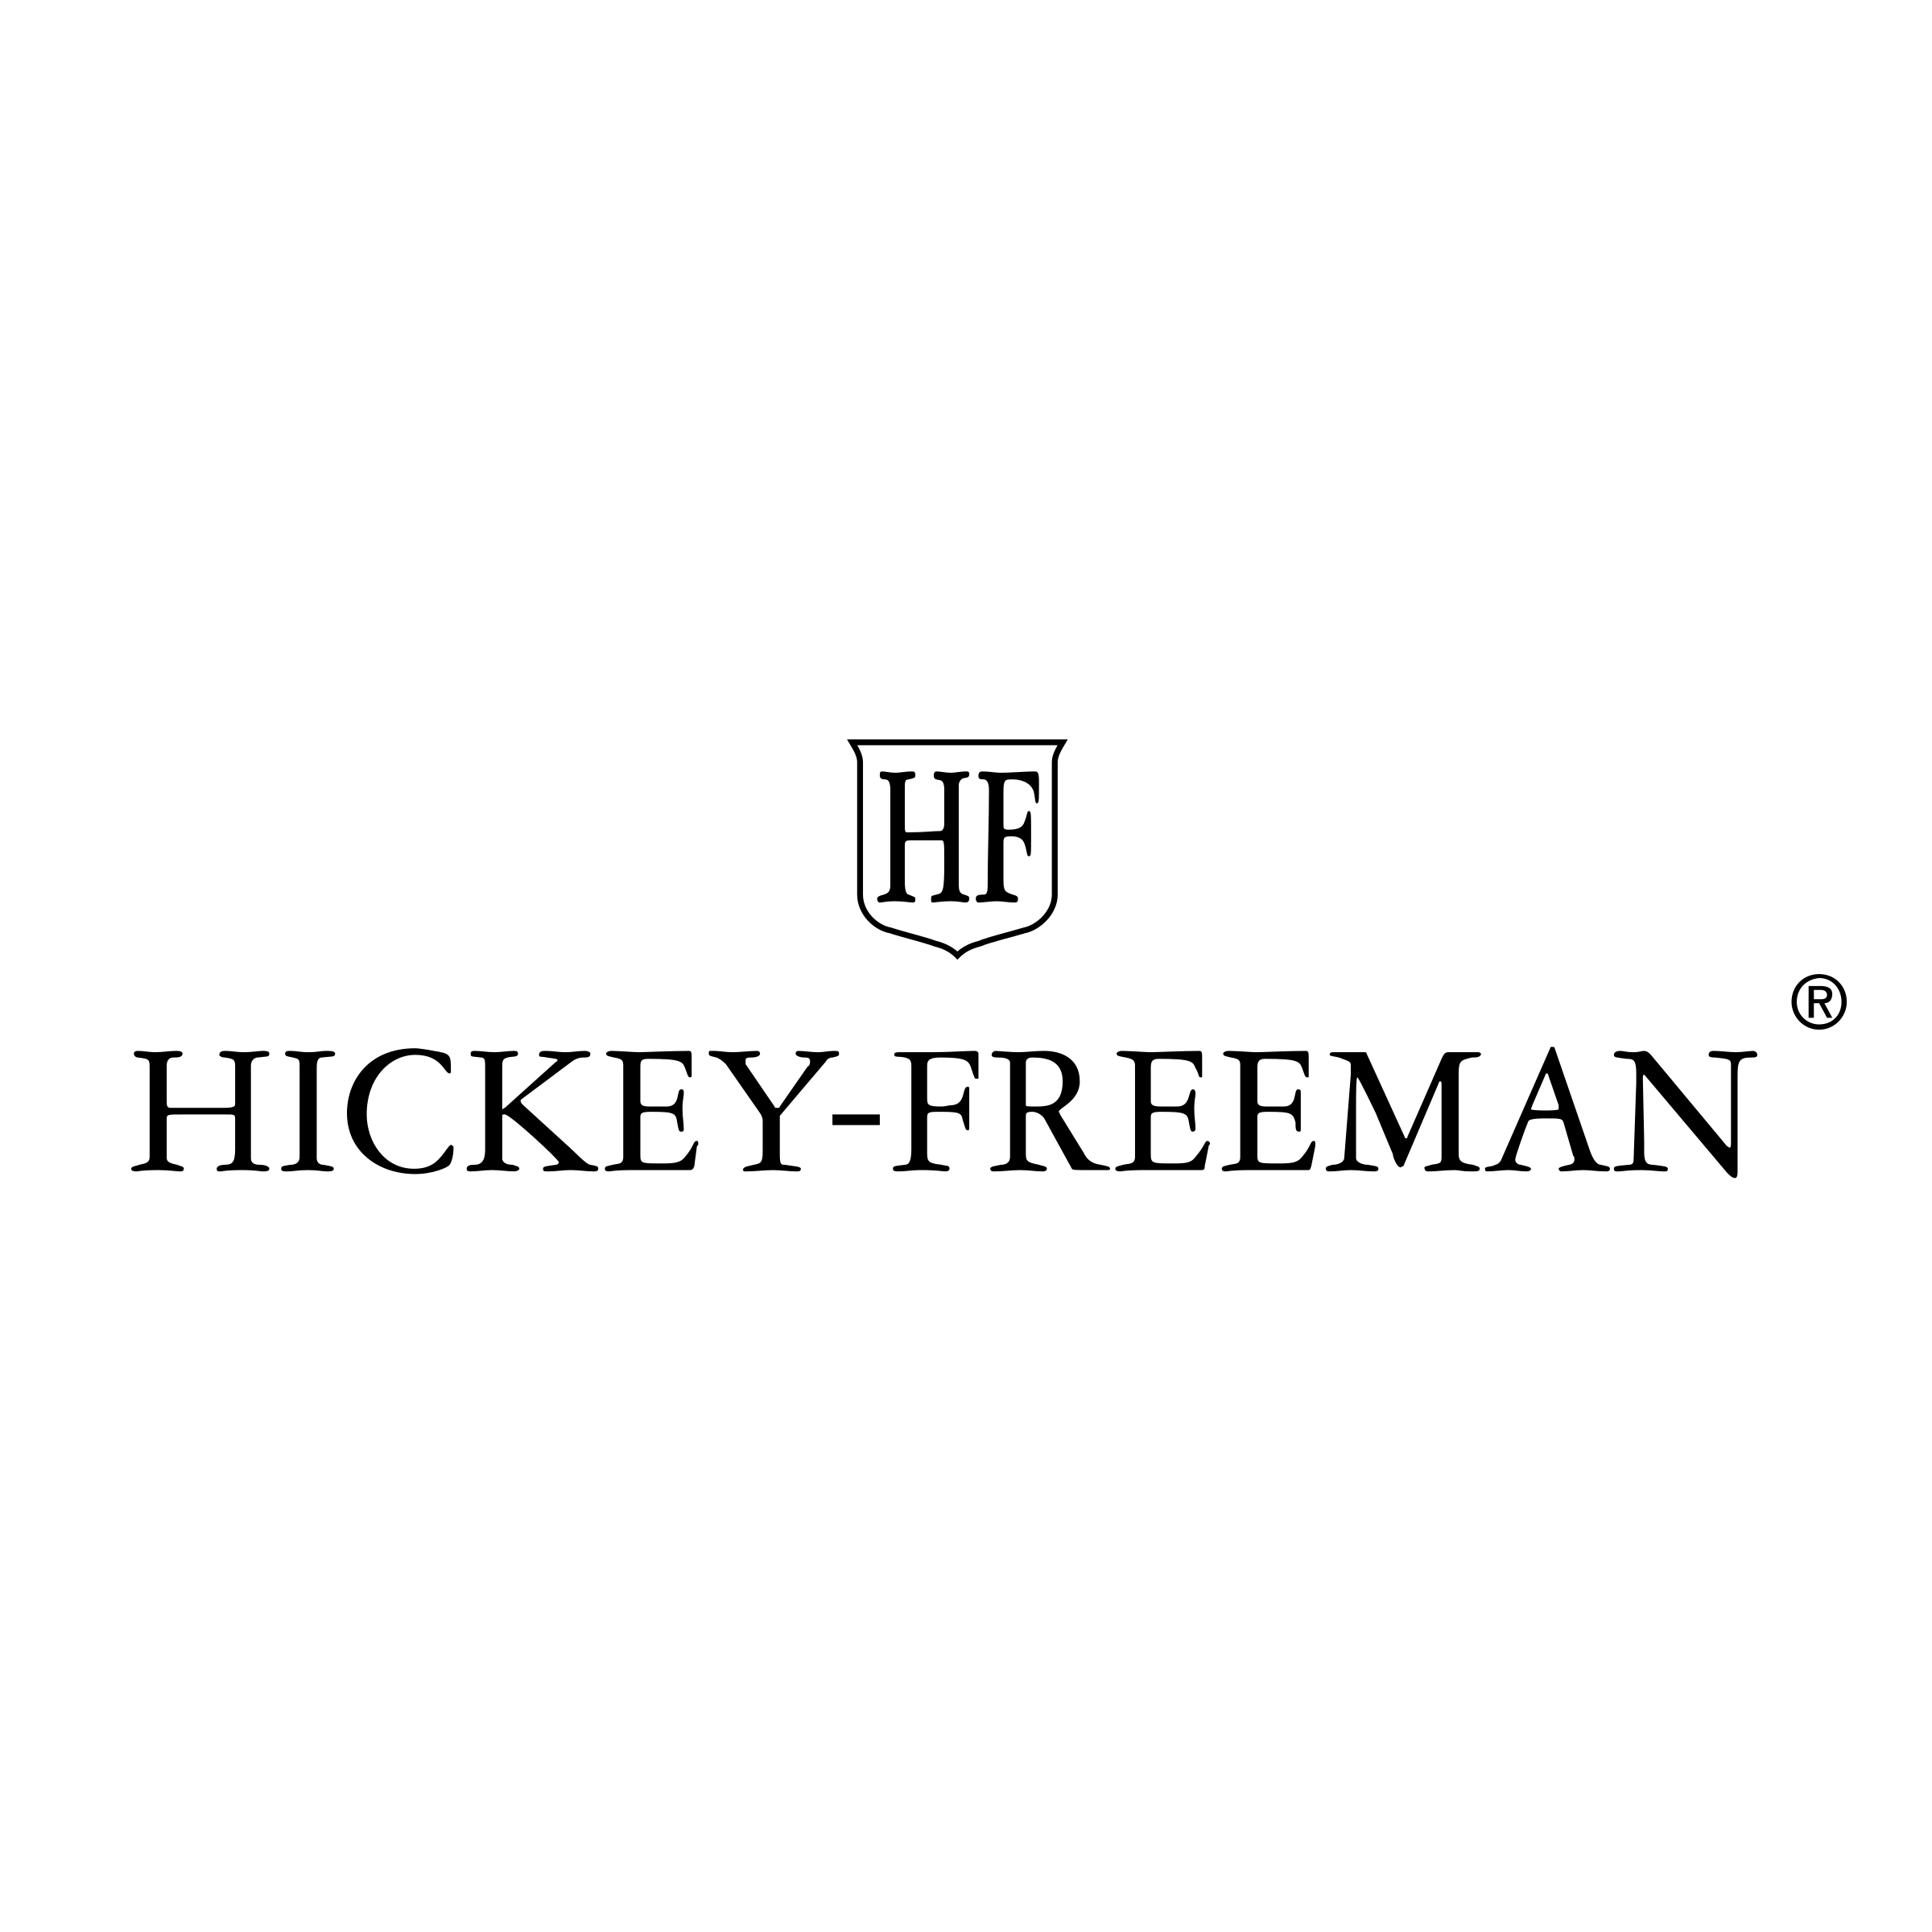 Hickey Logo - Hickey Freeman Logo PNG Transparent & SVG Vector